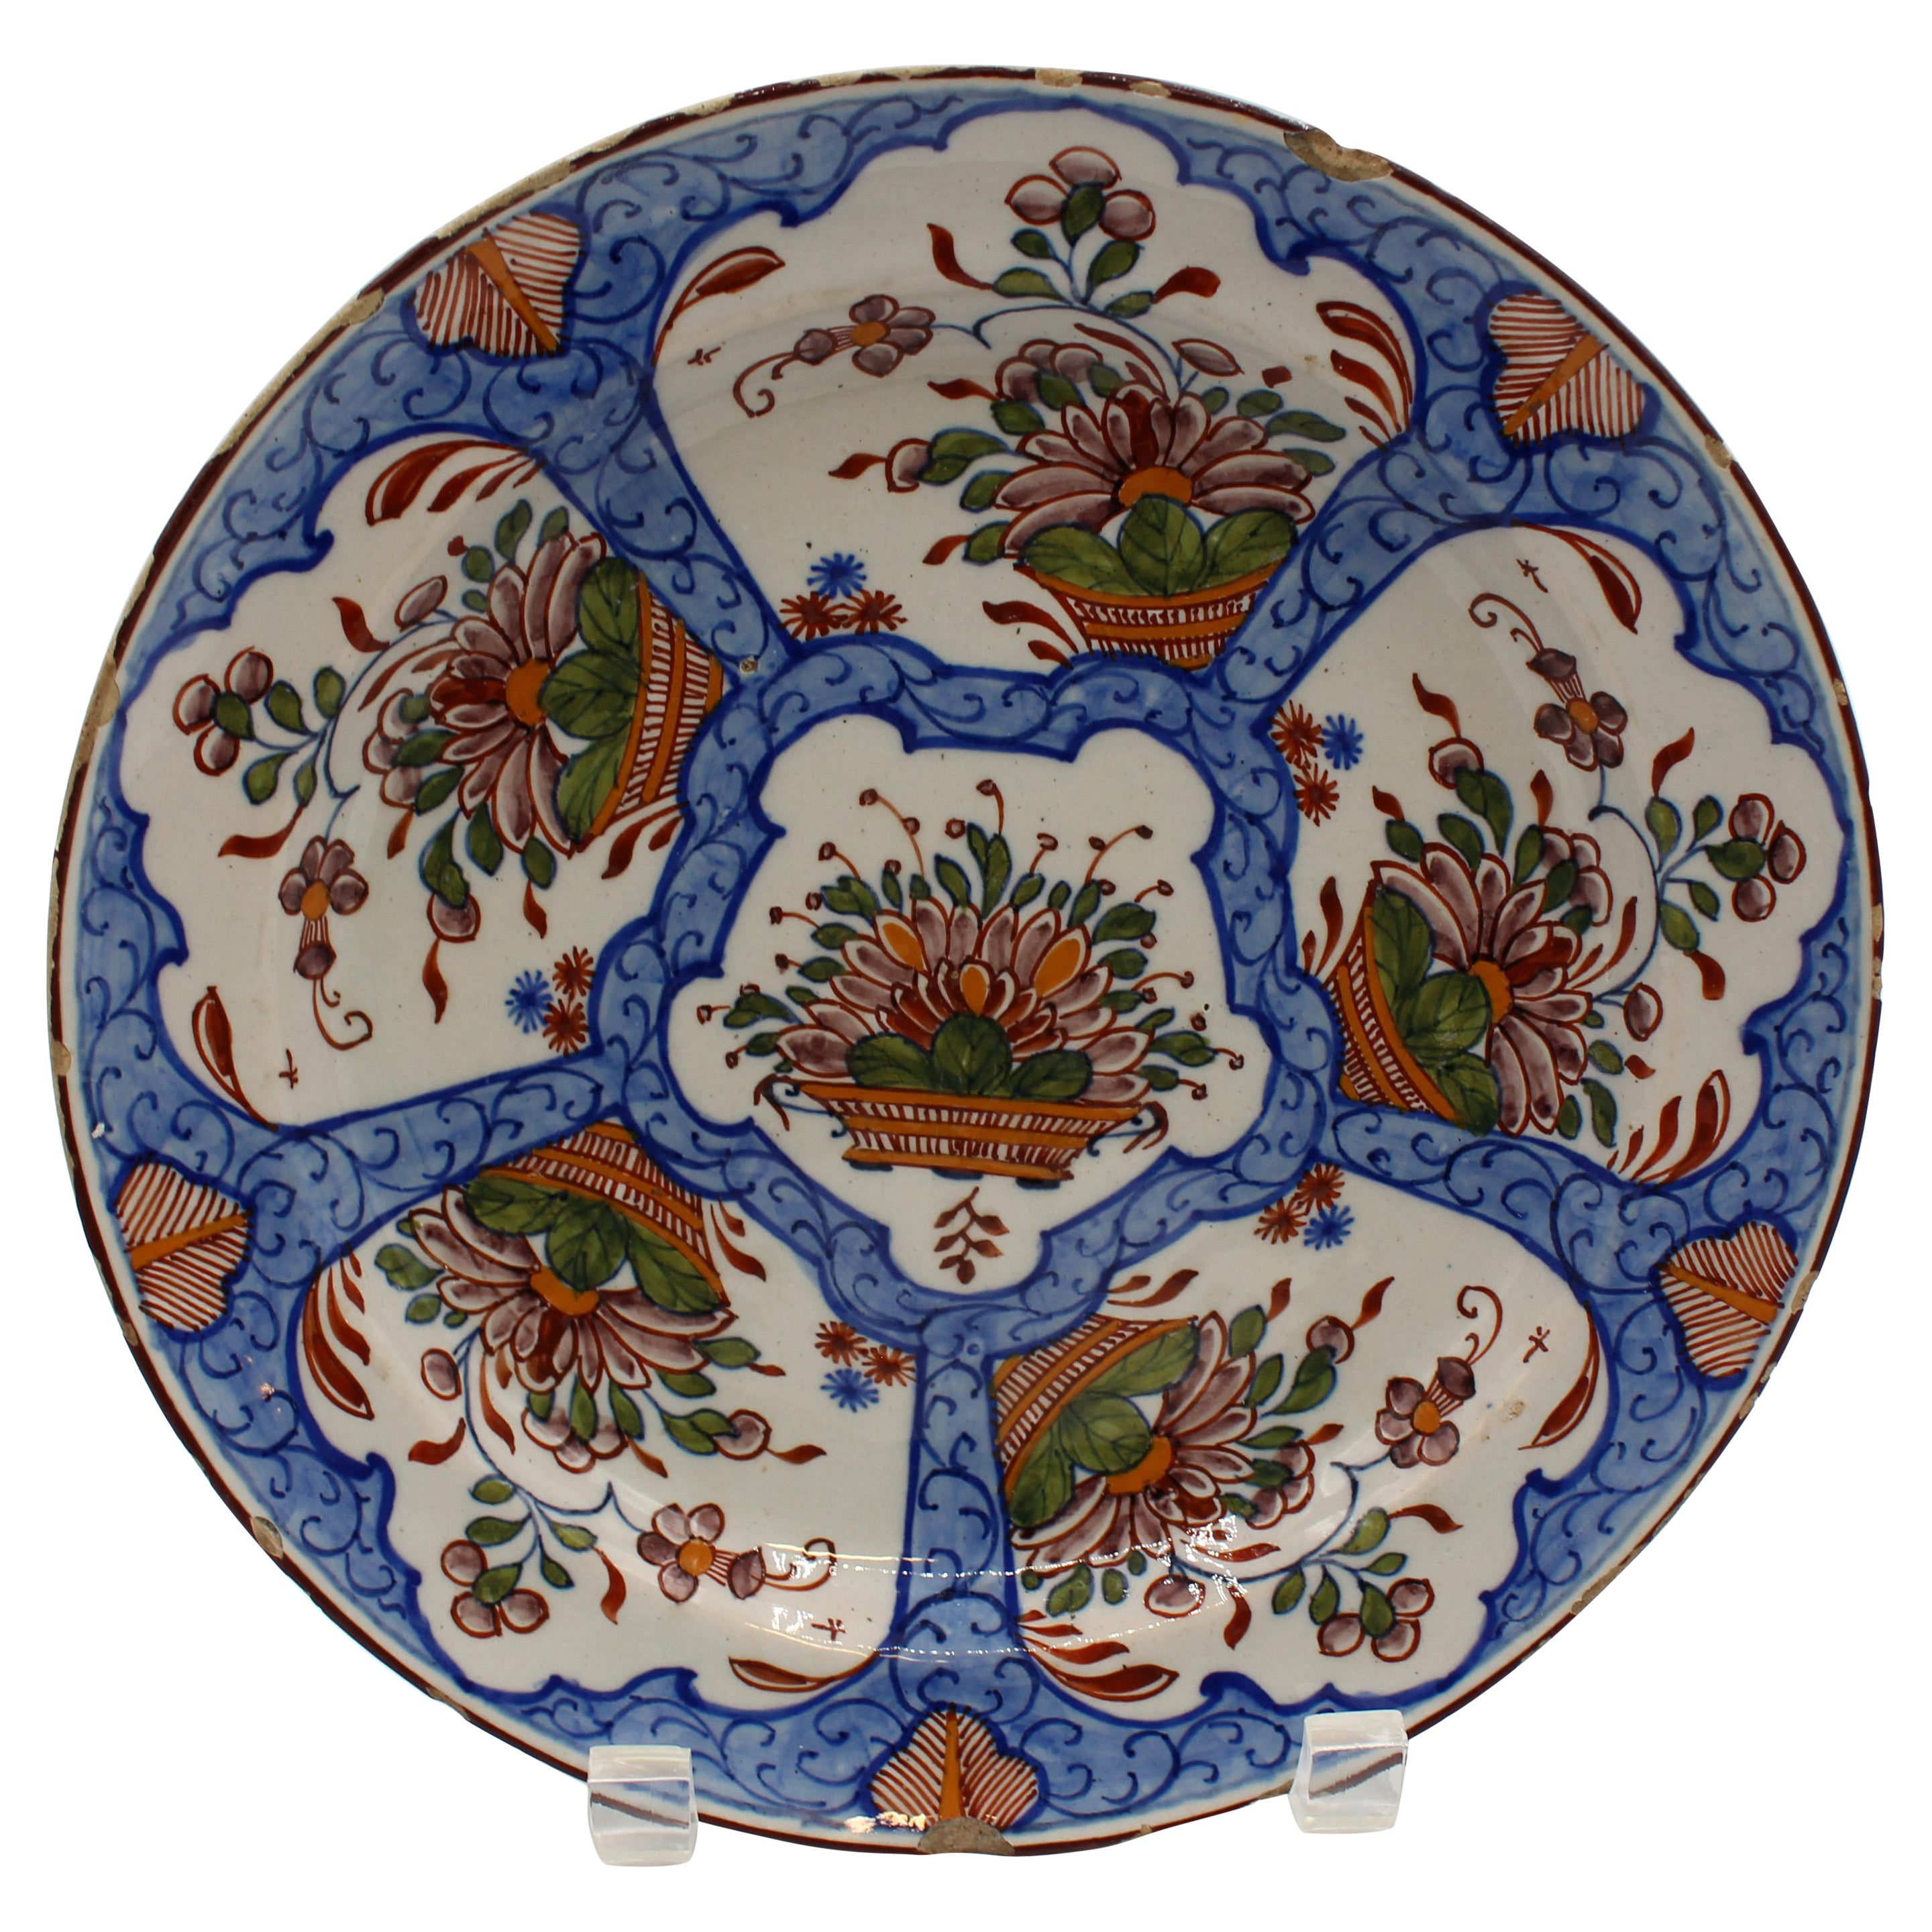 Circa 1770 Delft Polychrome Low Bowl or Plate